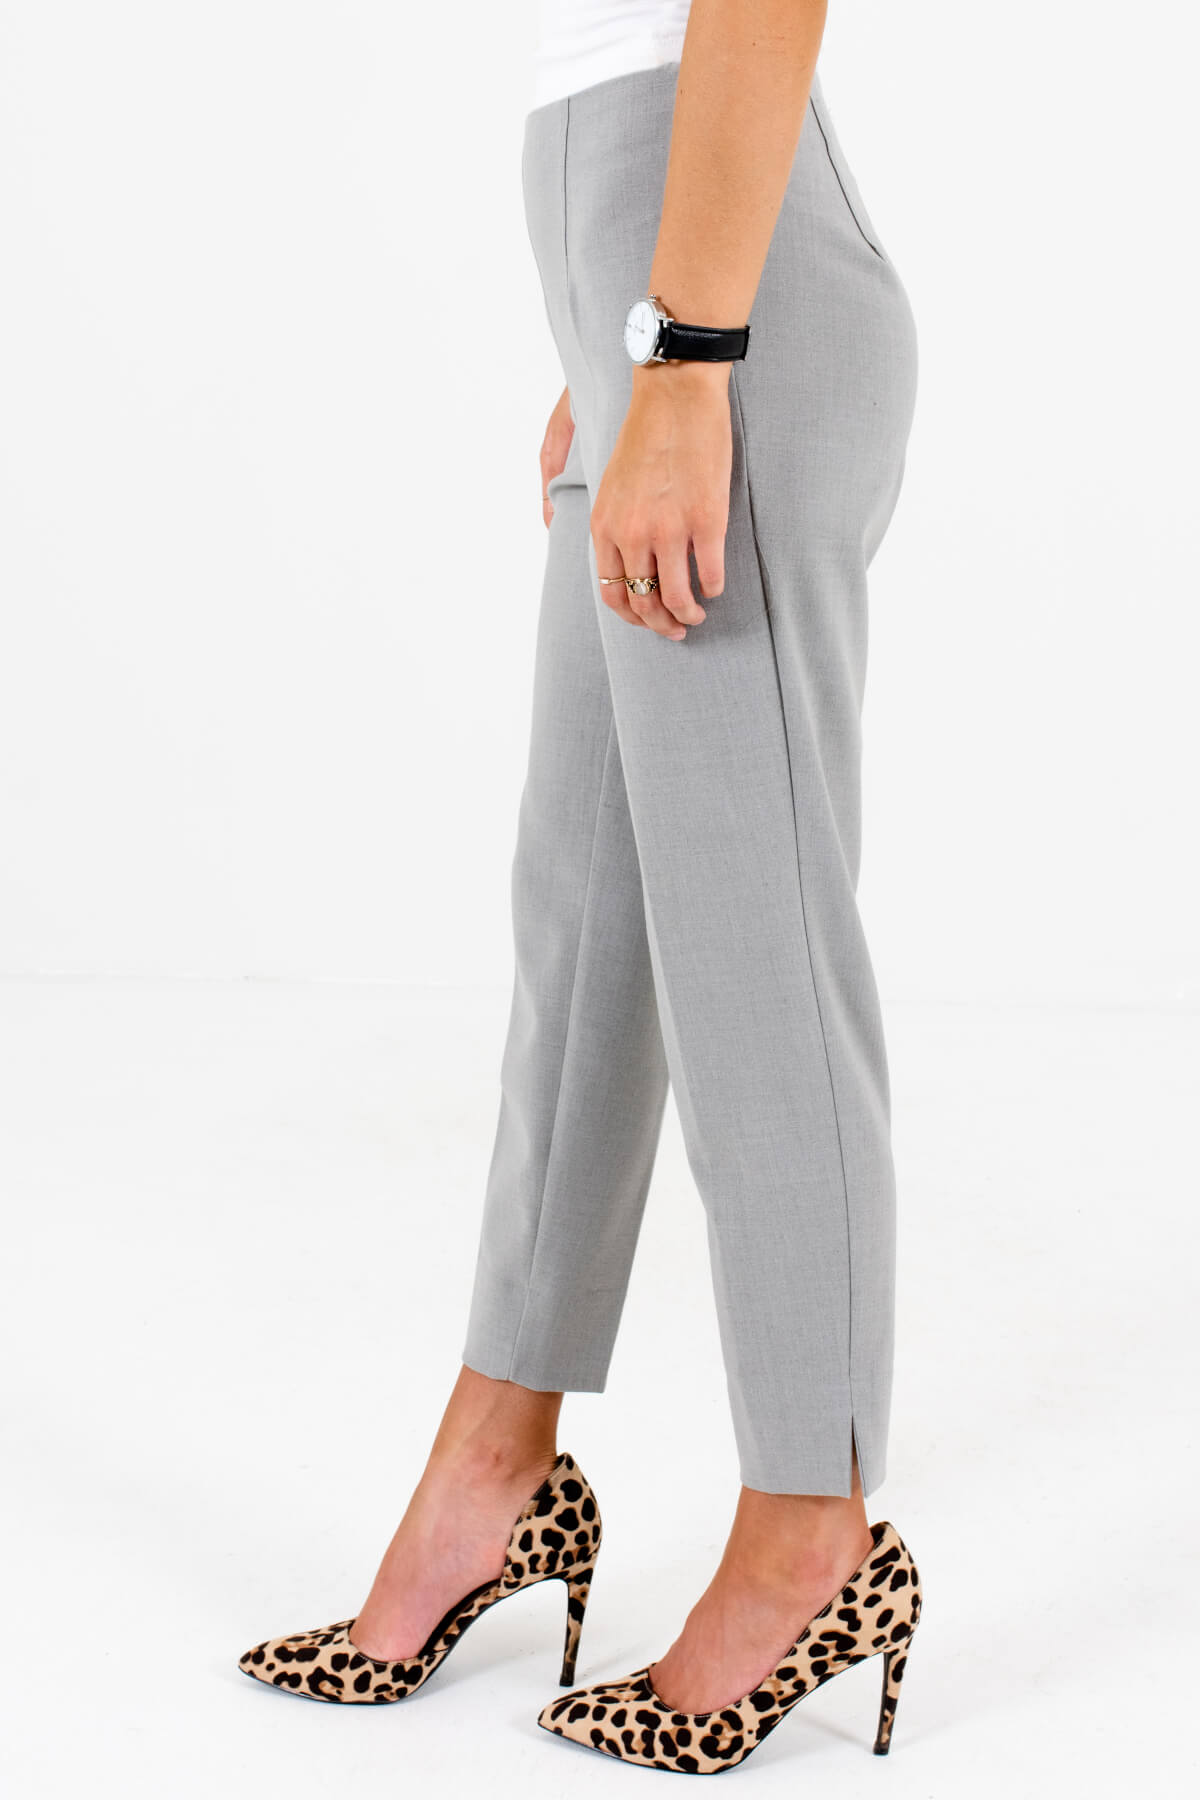 Buy Women Grey Solid Formal Trousers Online - 232416 | Allen Solly